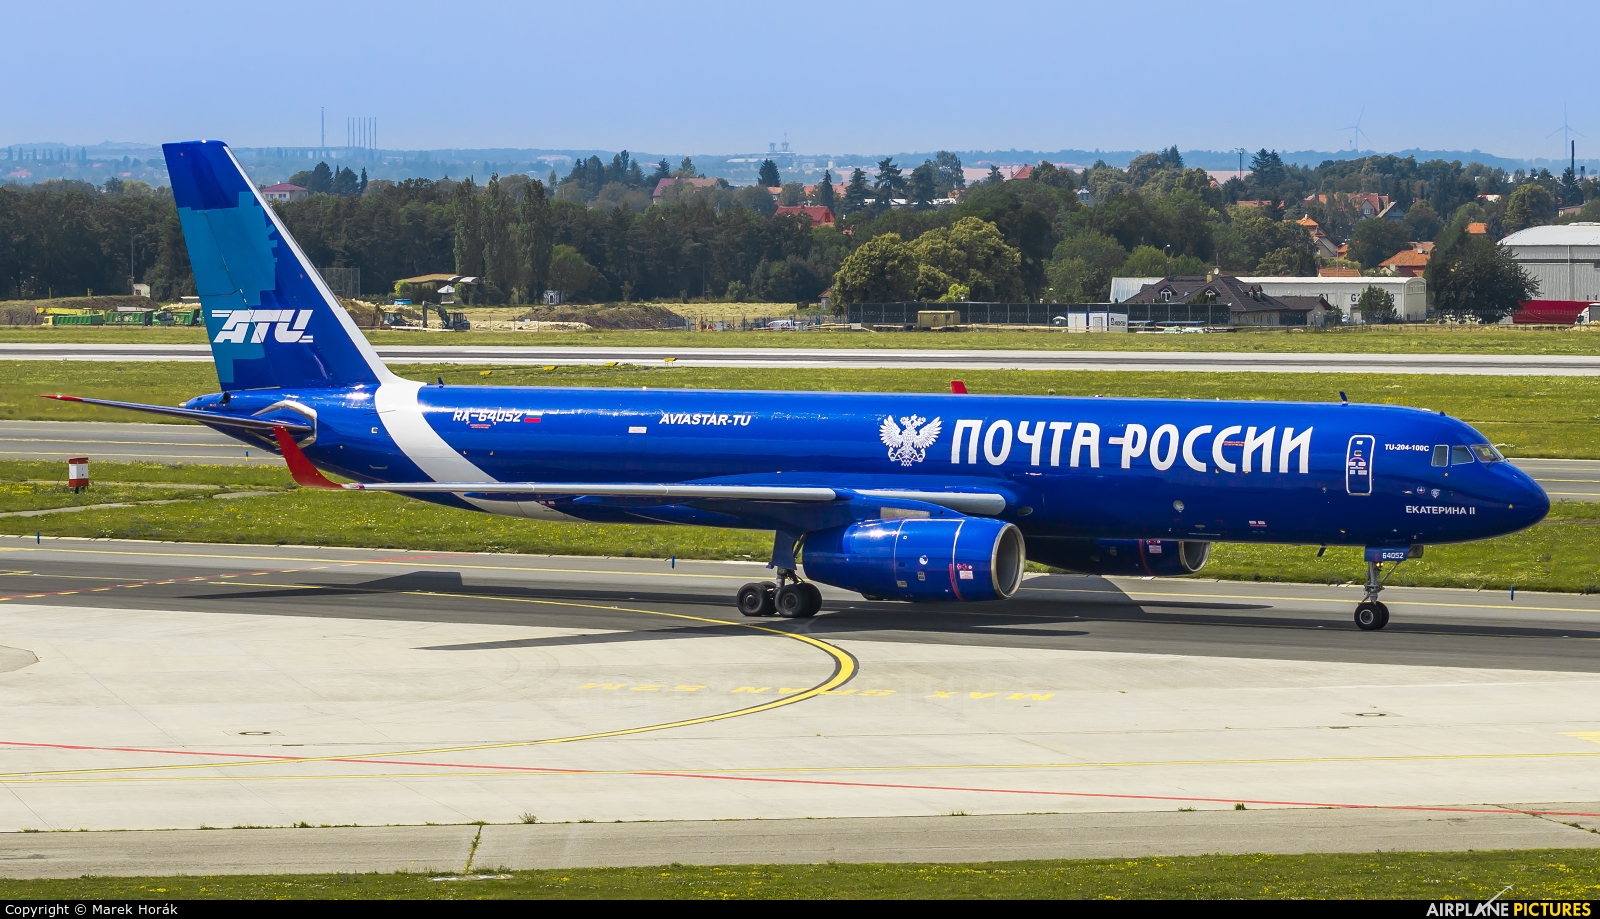 Pochta Rossii (Russian Post) RA-64052 aircraft at Prague - Václav Havel